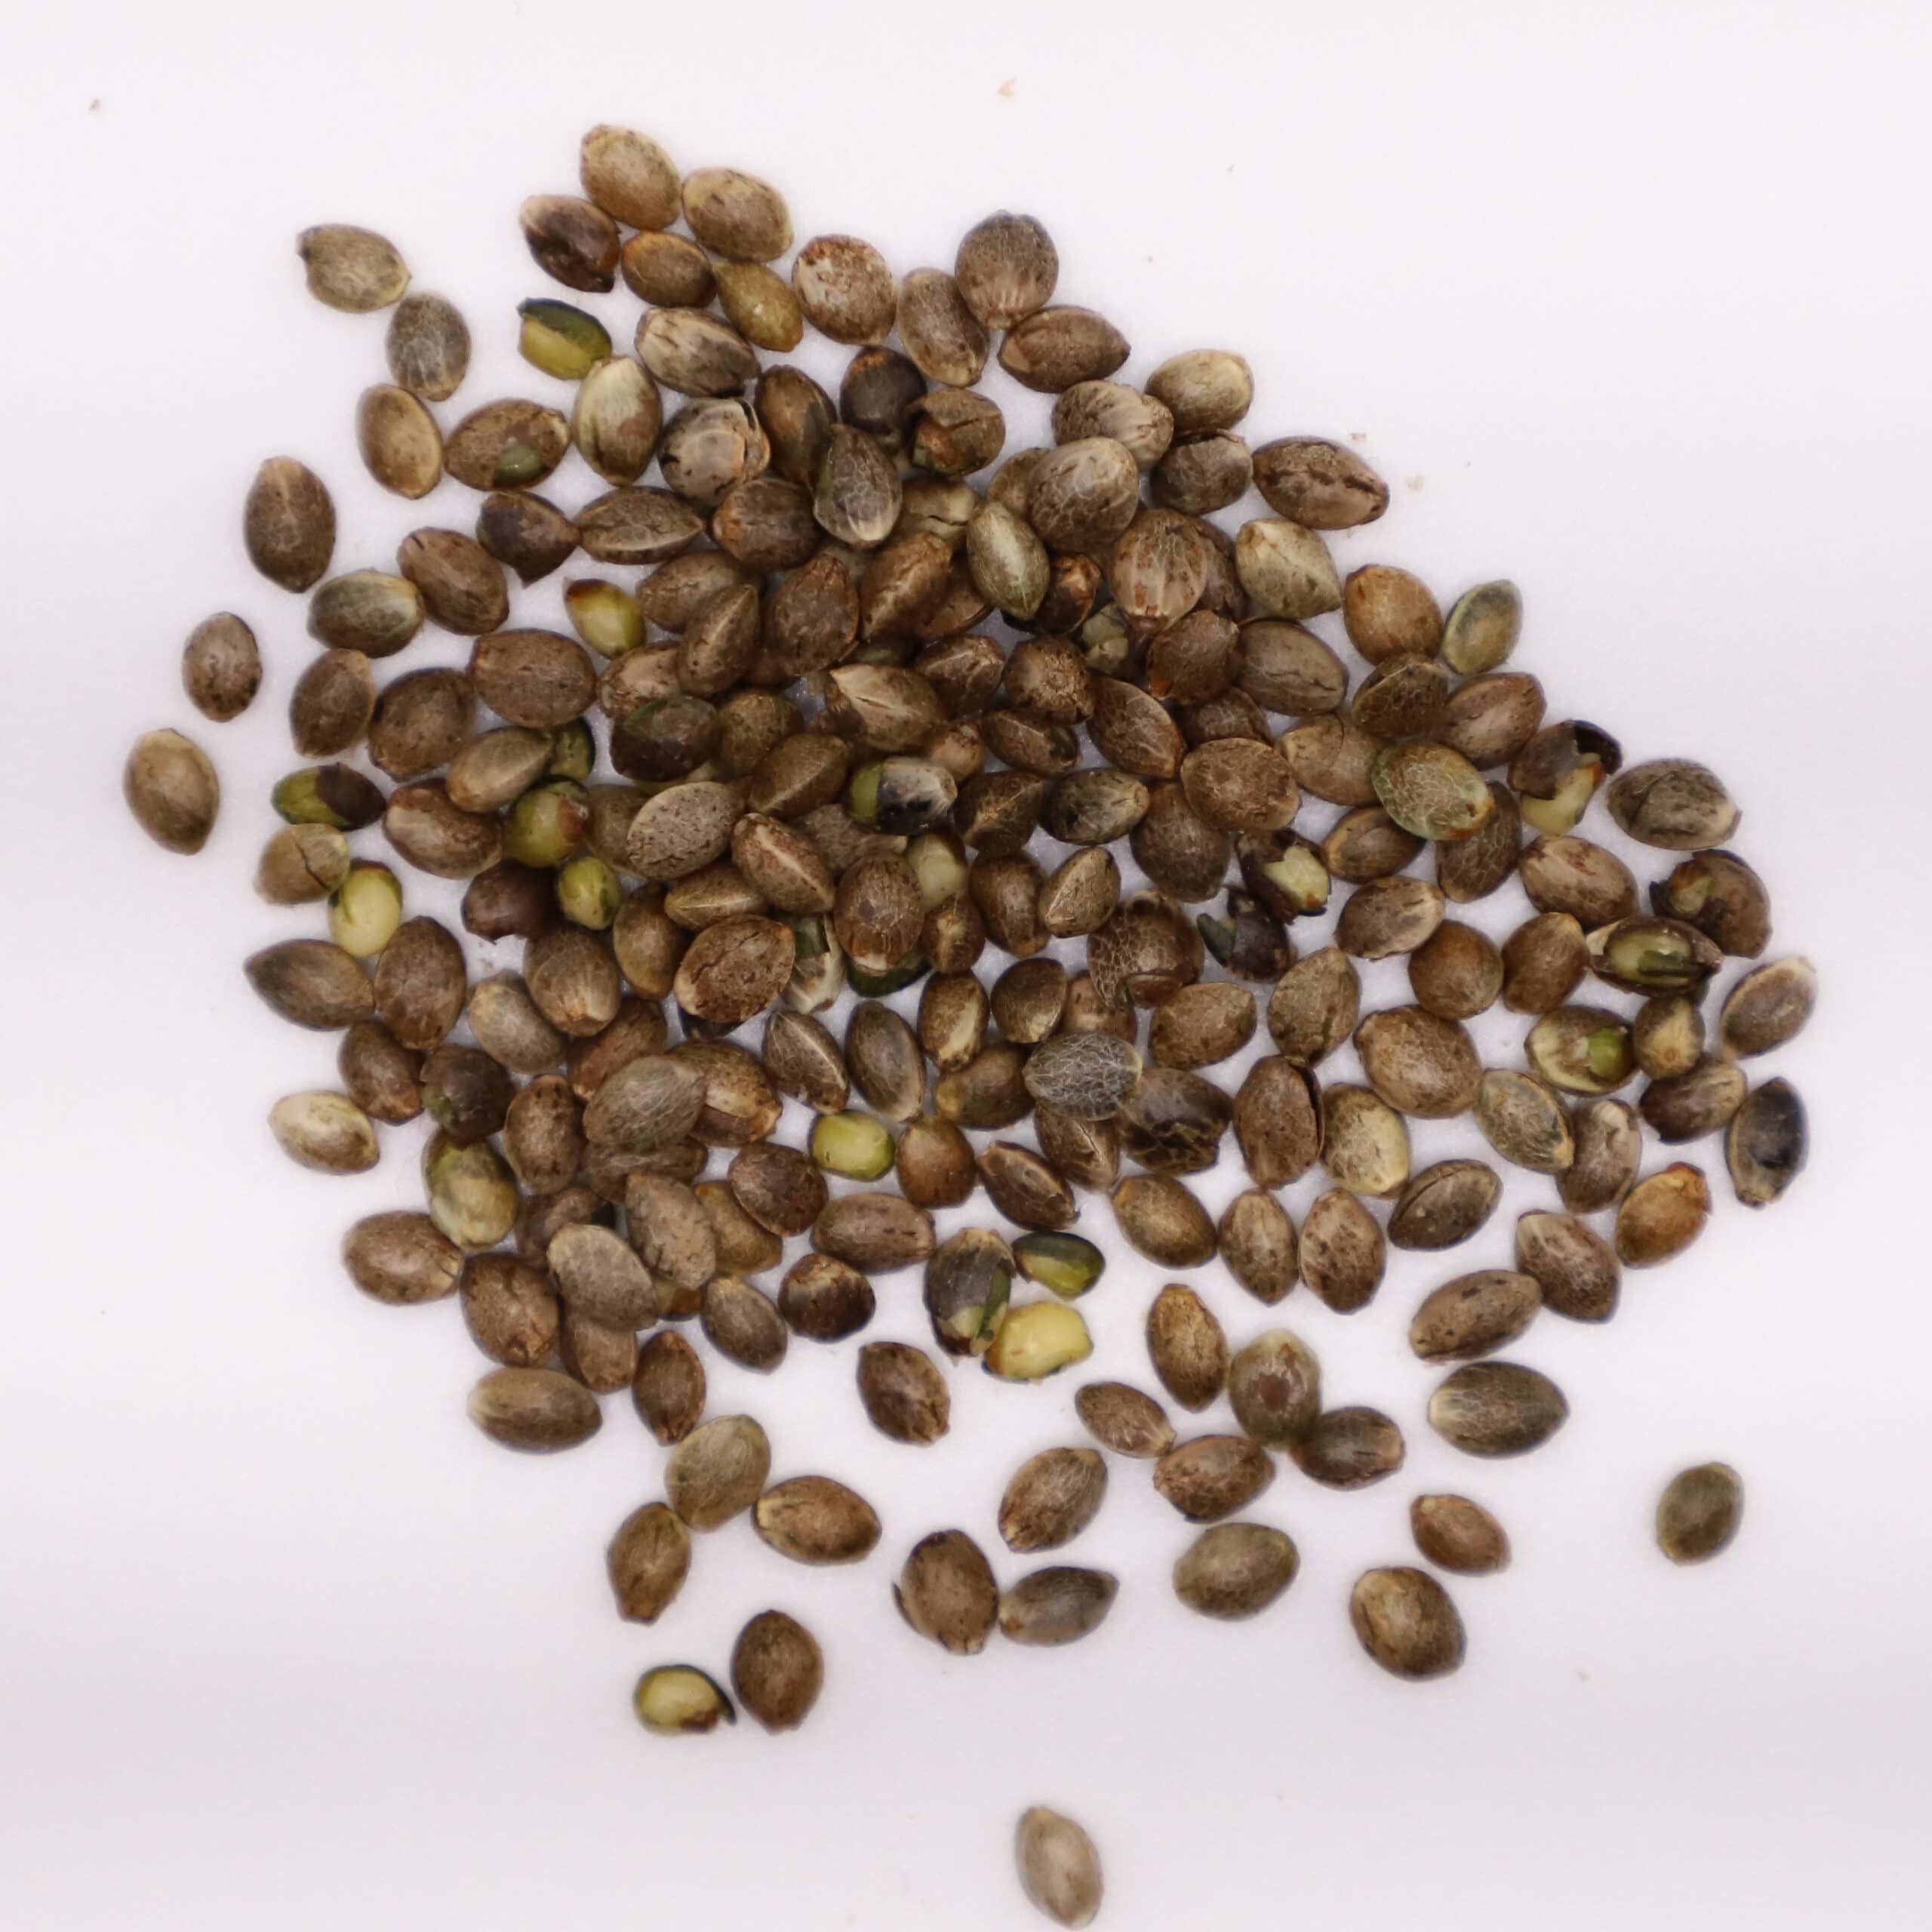 Featured image for “The Wife Top Shelf CBD Feminized Hemp Seeds”